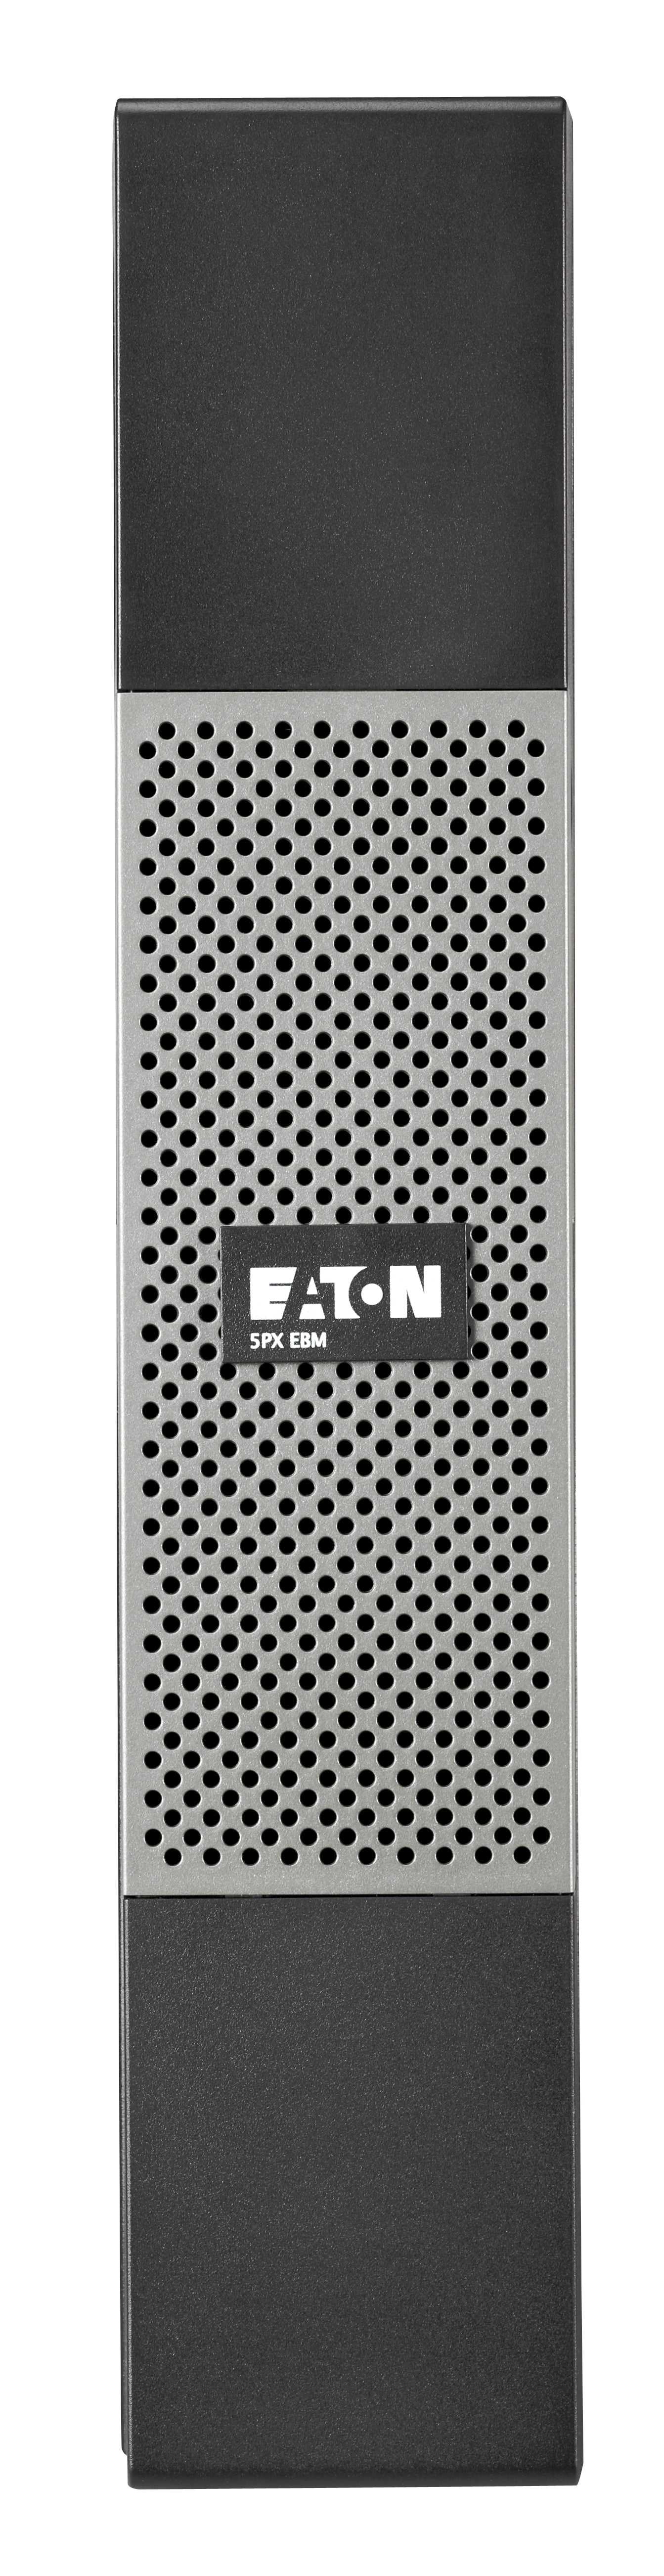 Eaton, Eaton 5Px Ebm 72V Rt2U Sealed Lead Acid (Vrla)